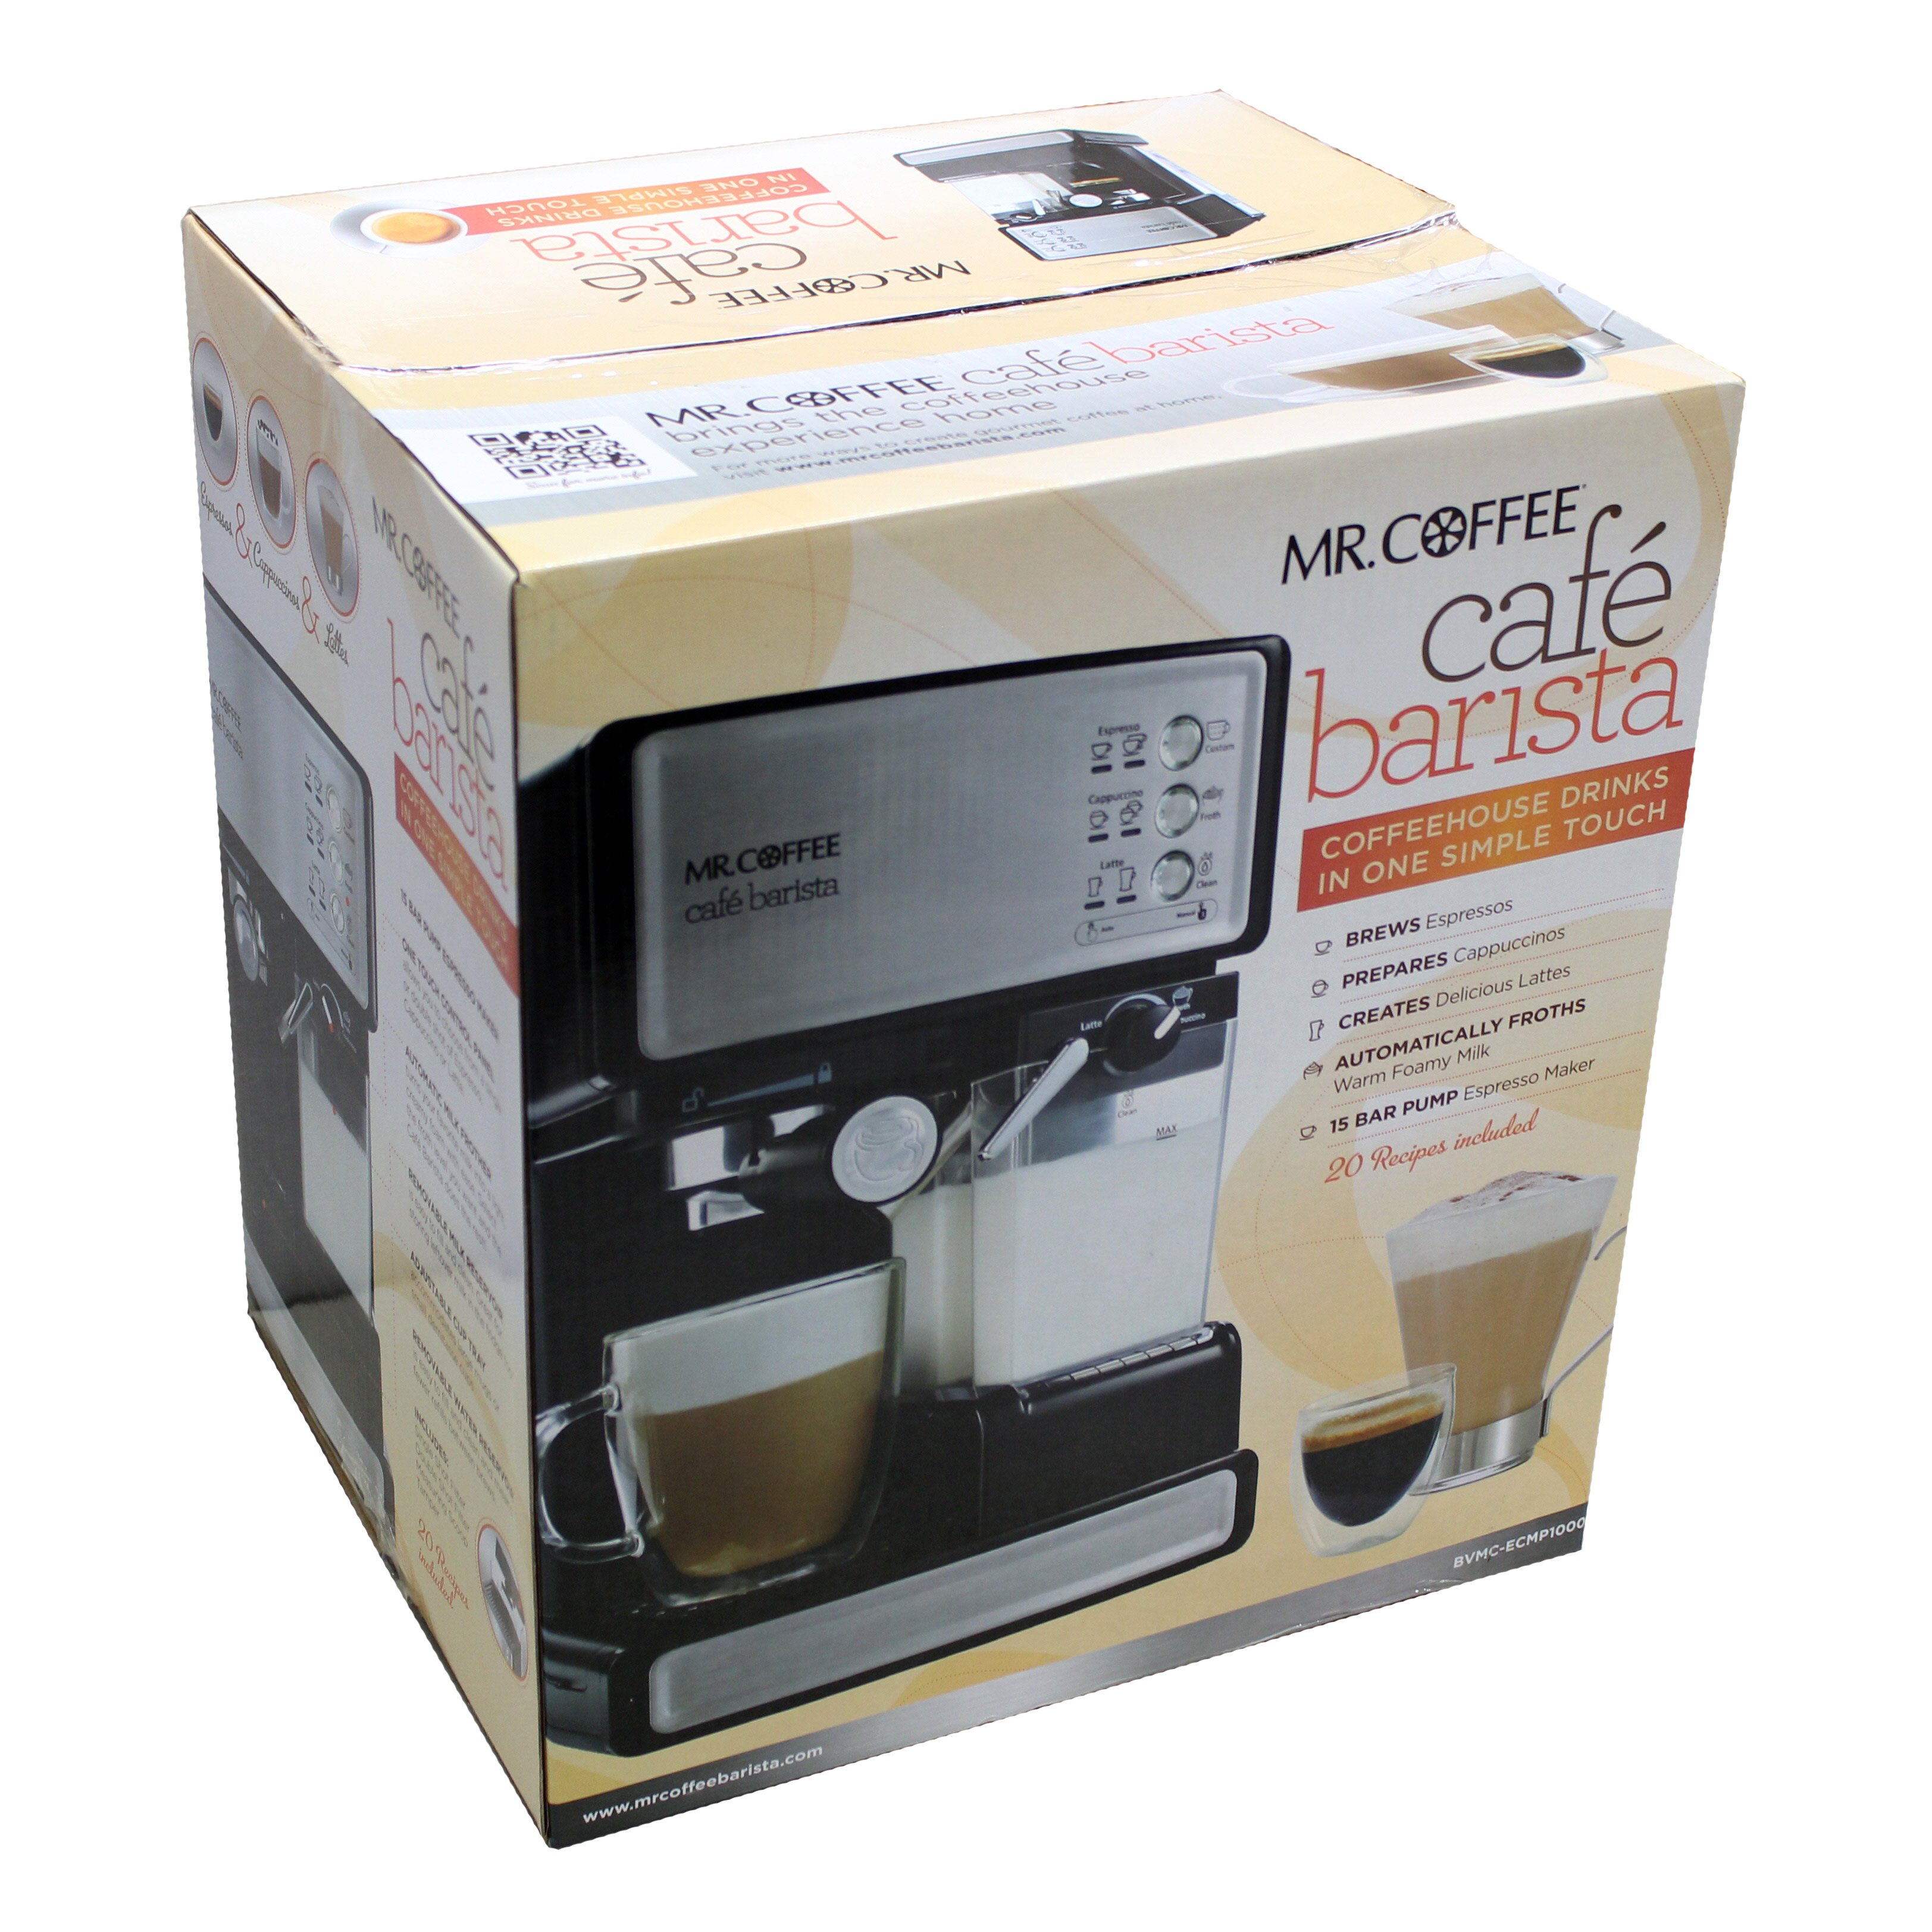 Mr. Coffee Cafe Barista BVMC-ECMP1000-RB review